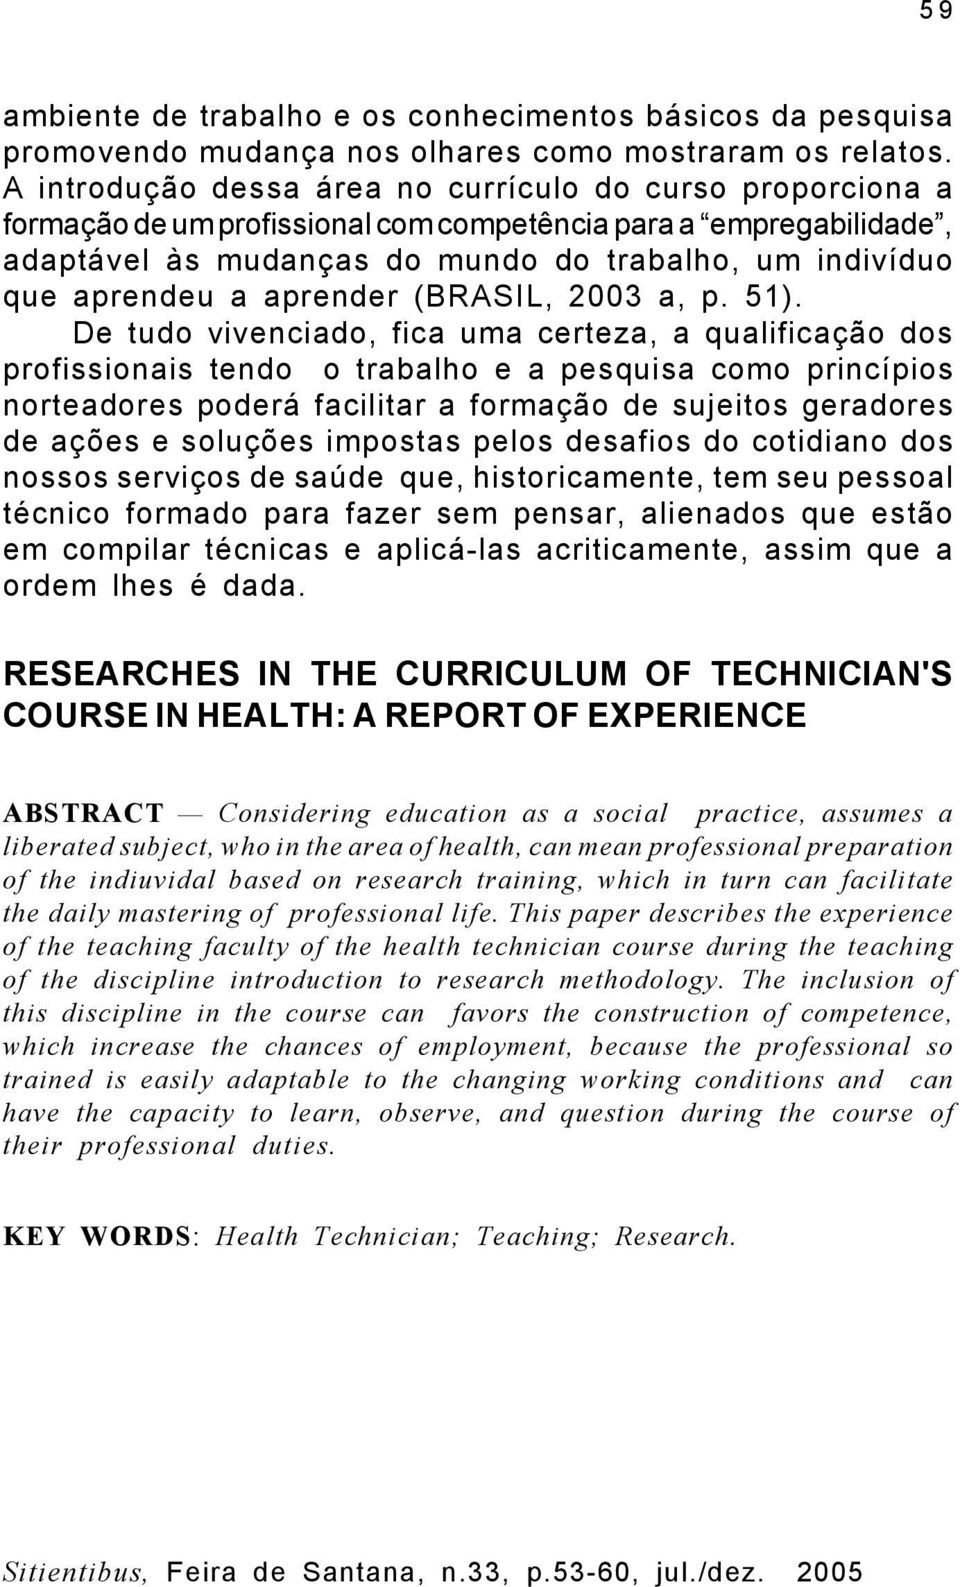 aprender (BRASIL, 2003 a, p. 51).